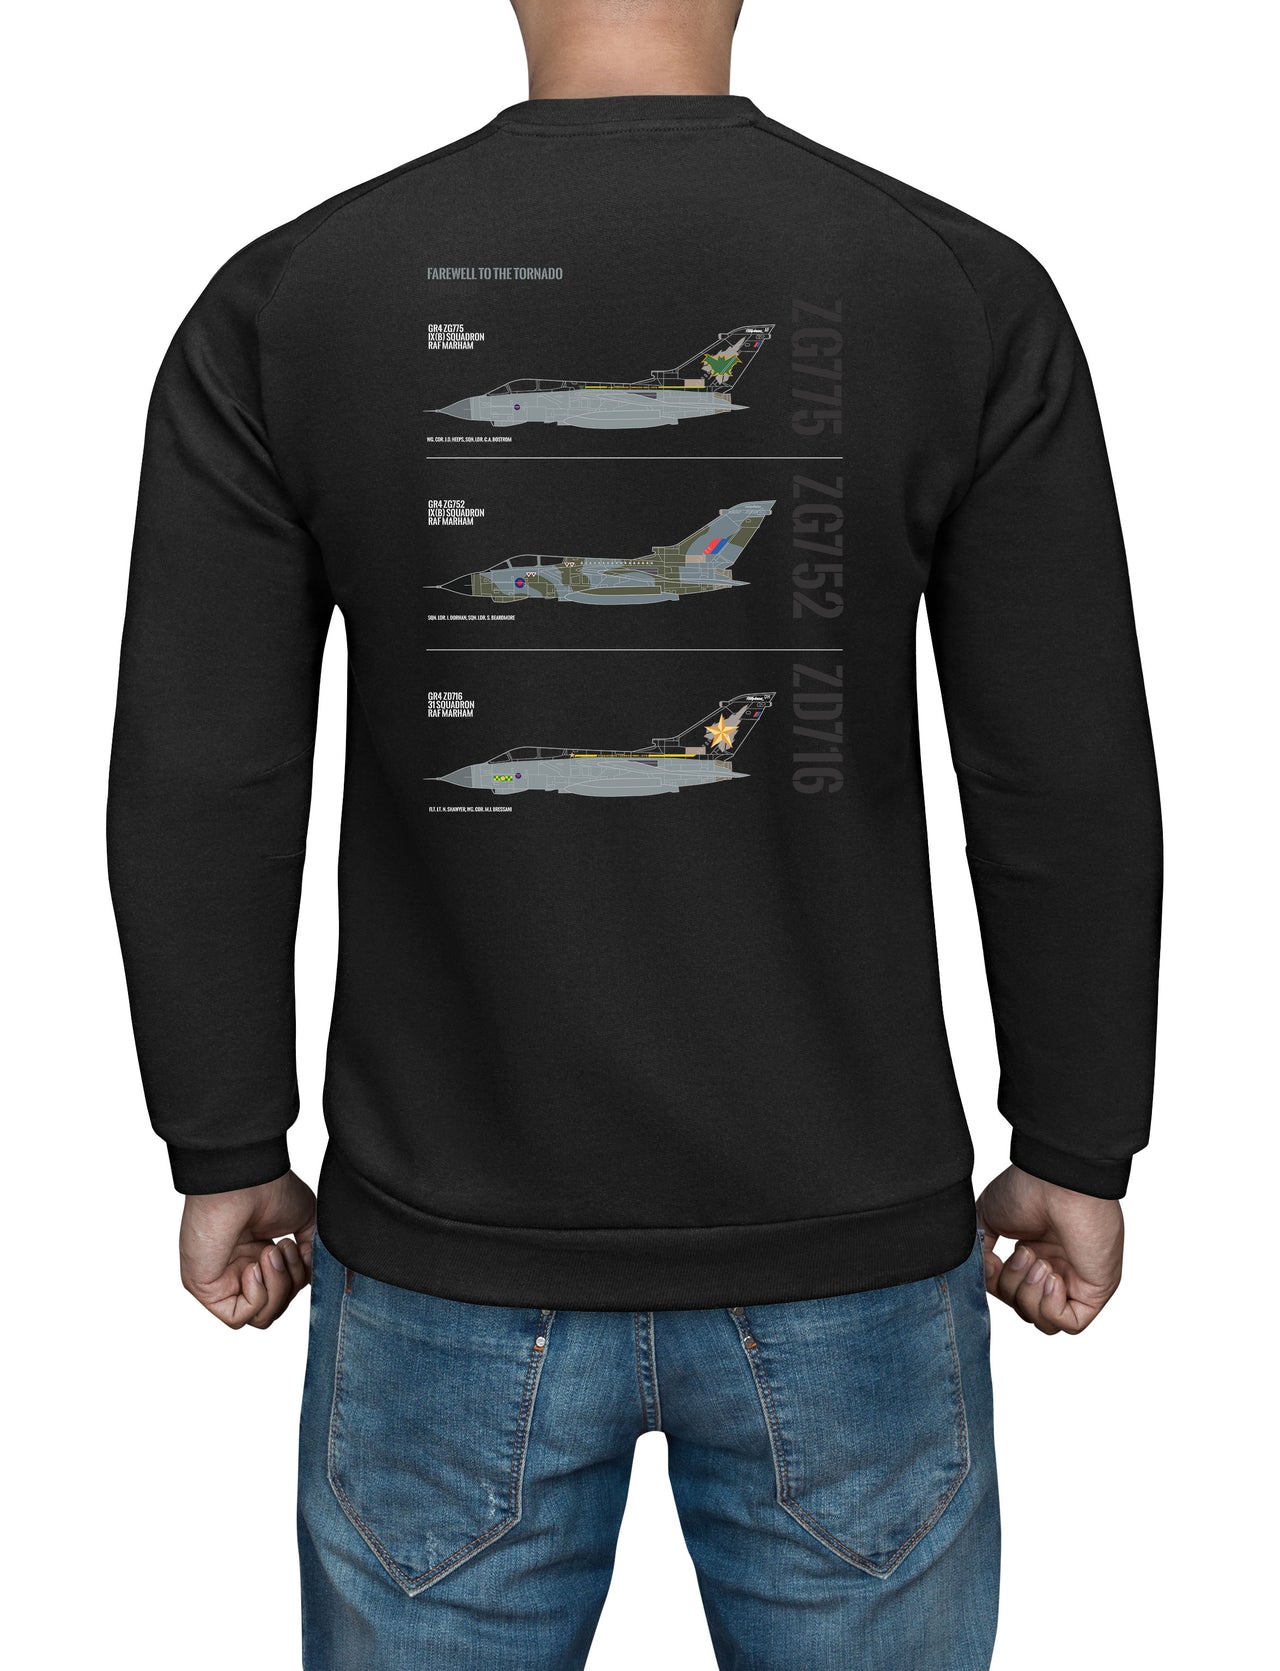 Tornado ZG775 - Sweat Shirt